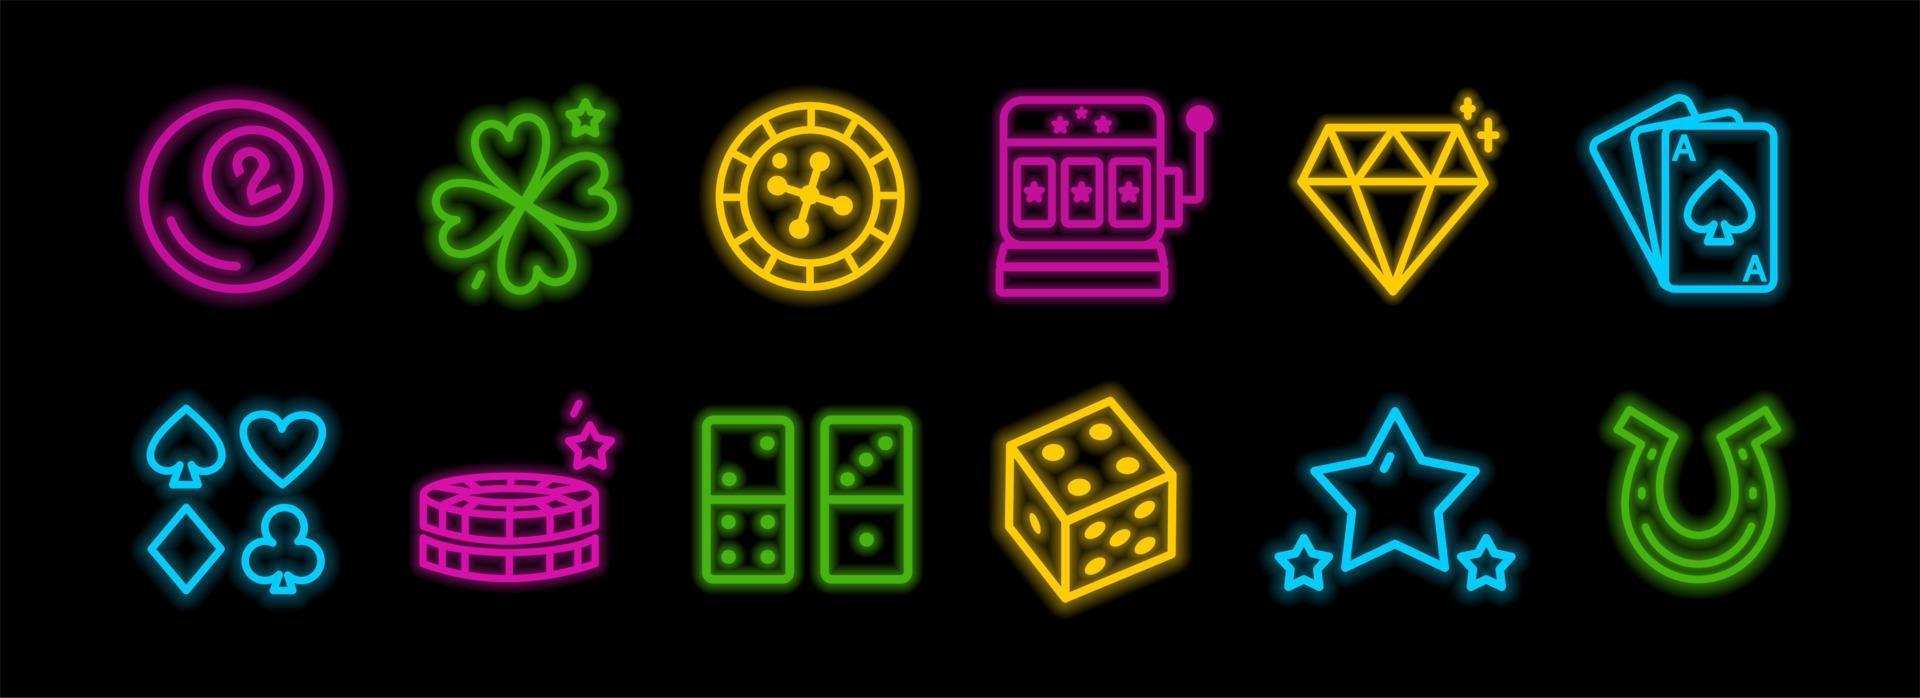 Casino-Neon-Symbole. Vorlagen im Neon-Stil. Vektor-Illustration vektor